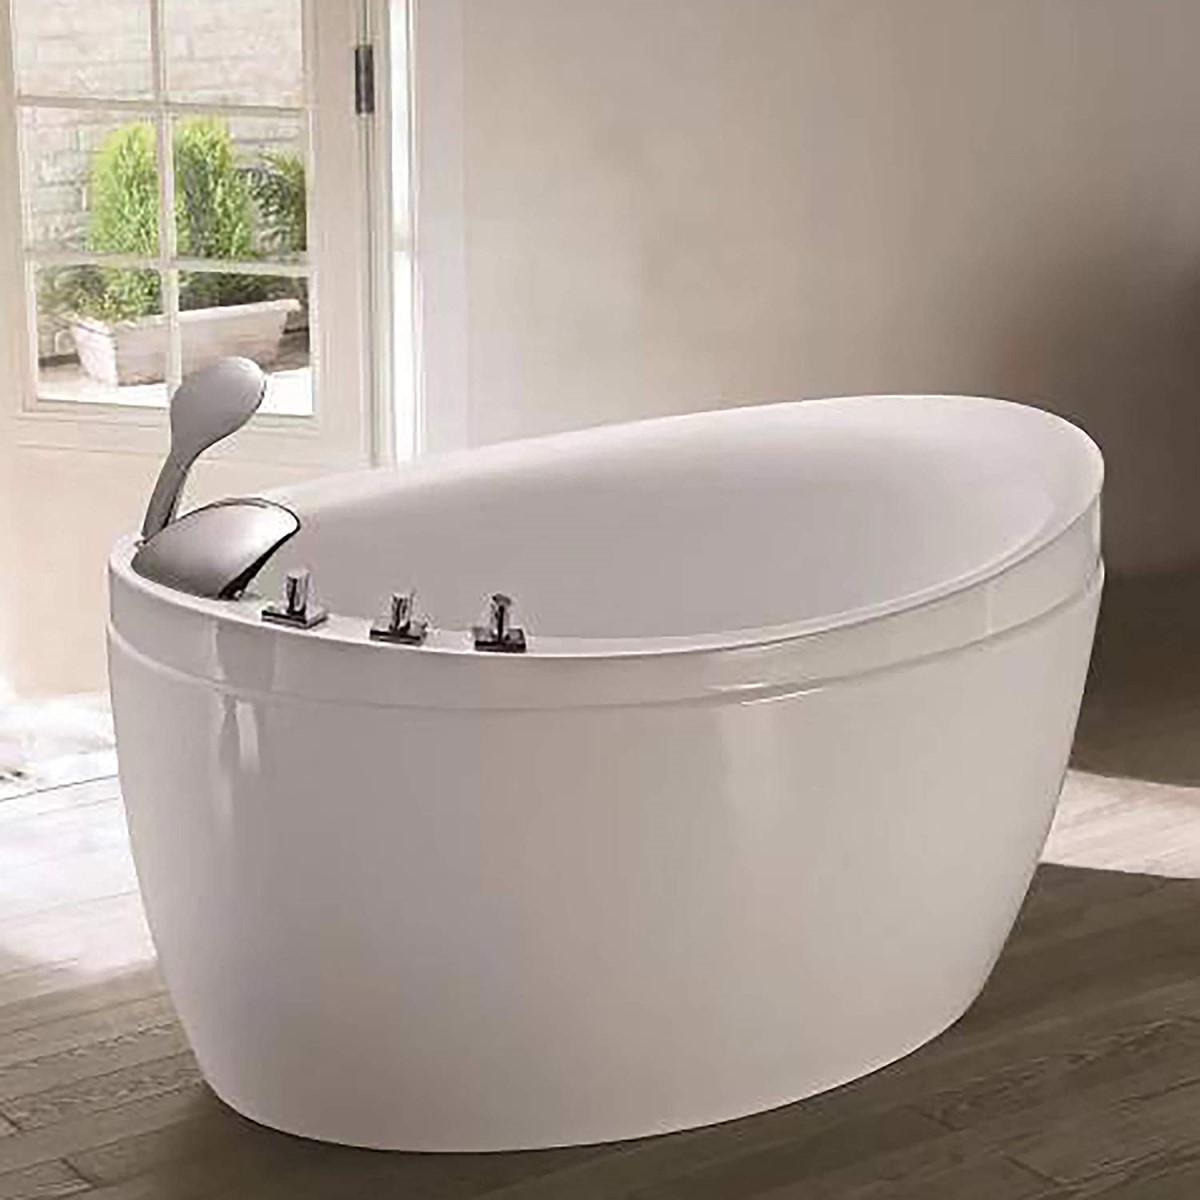 The Average Bathtub Size for a Soaking Tub